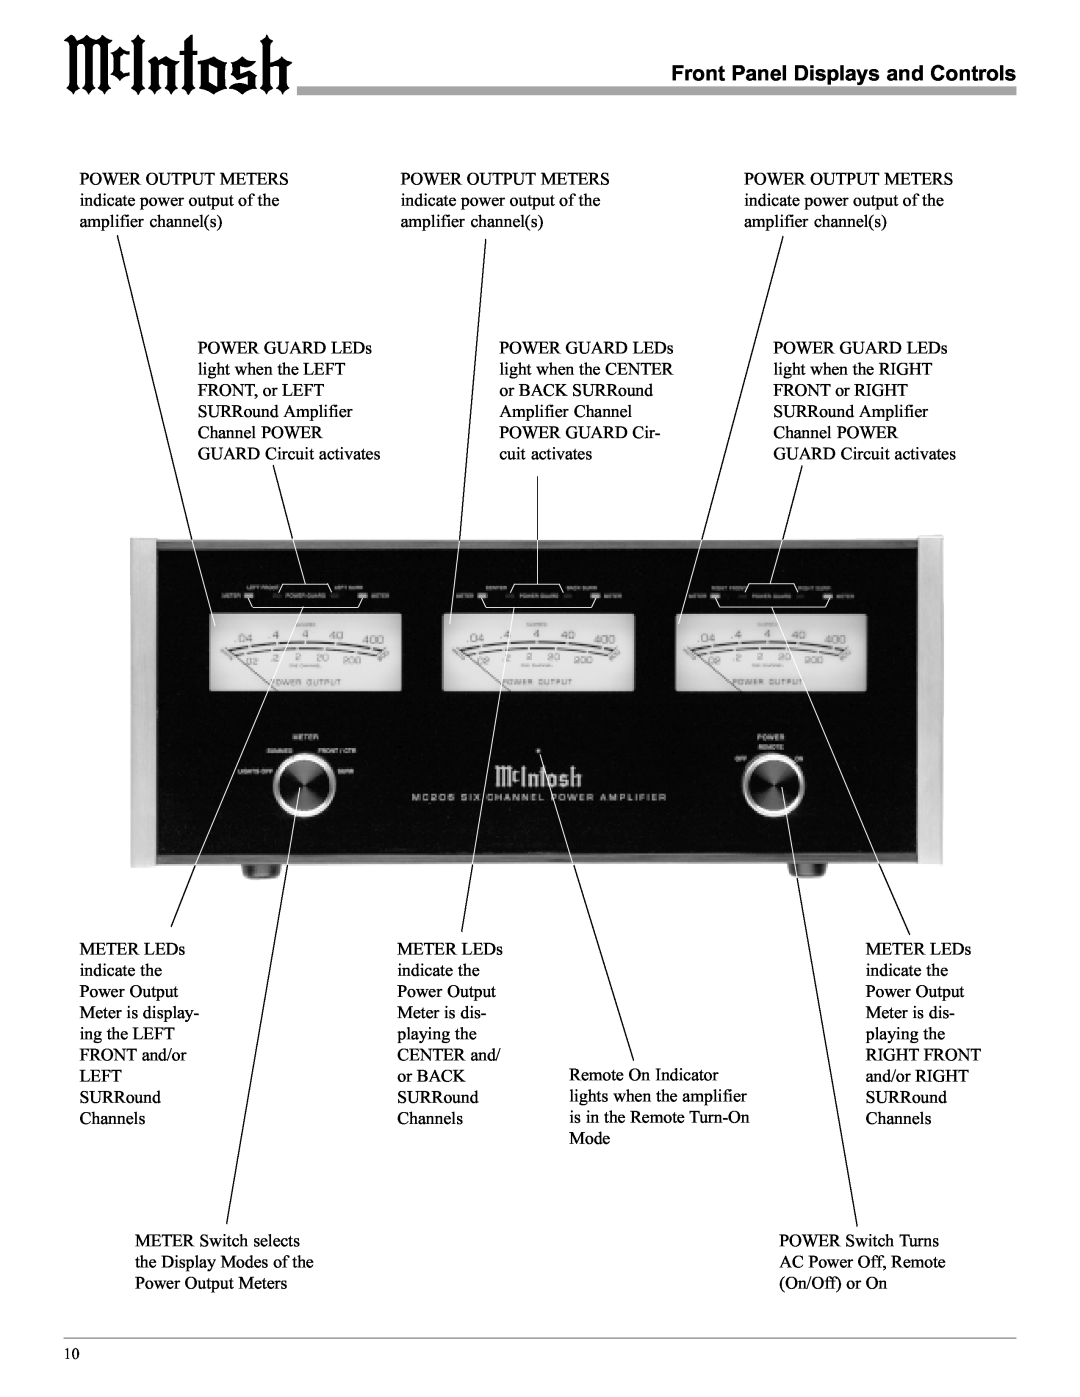 McIntosh MC206 manual Front Panel Displays and Controls 